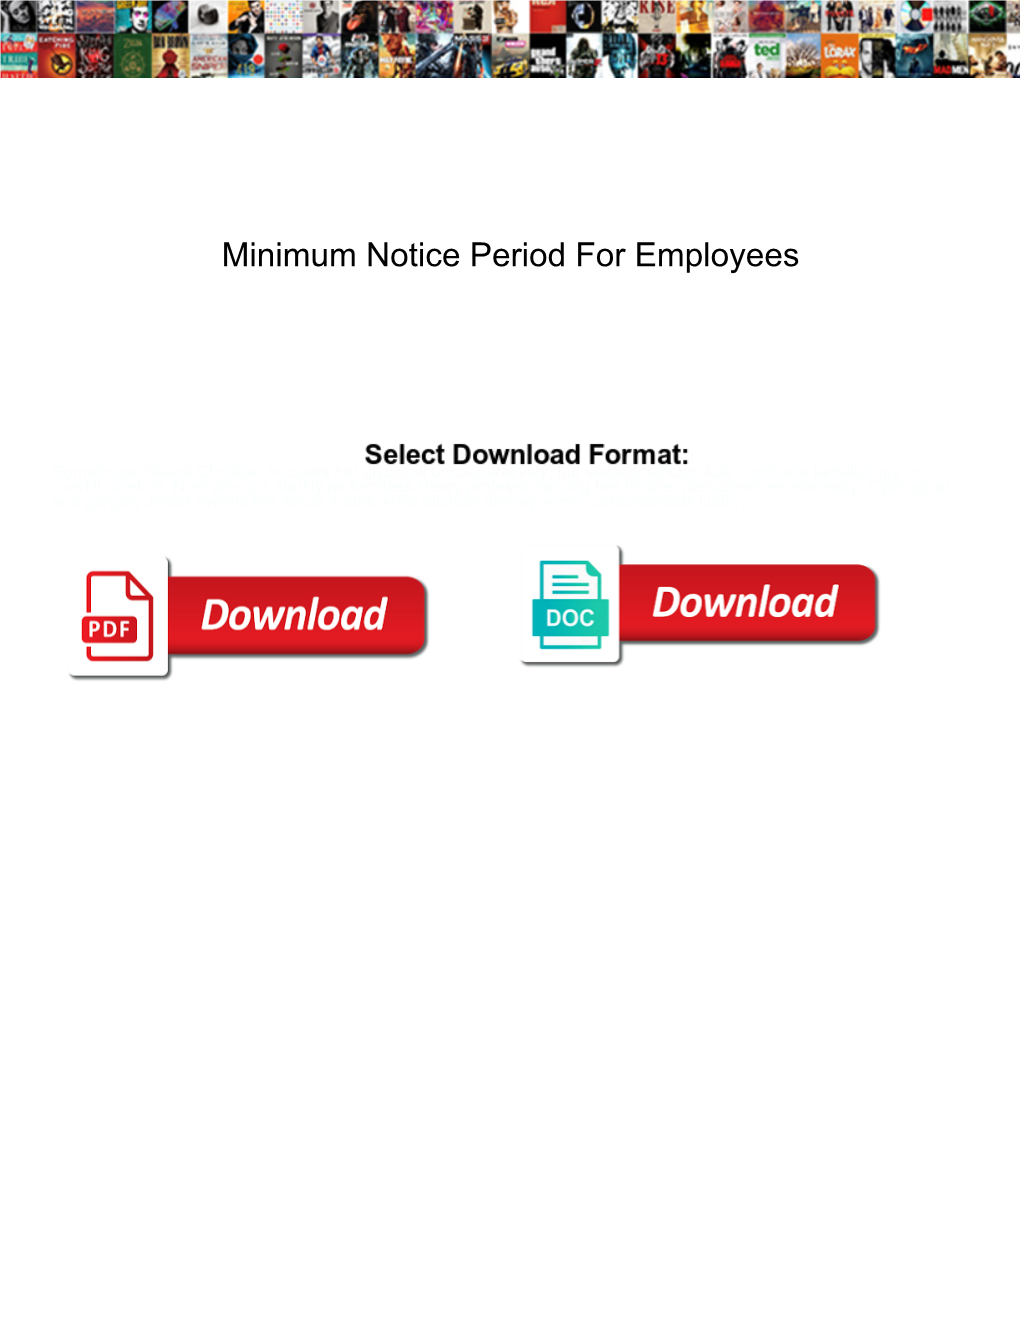 Minimum Notice Period for Employees